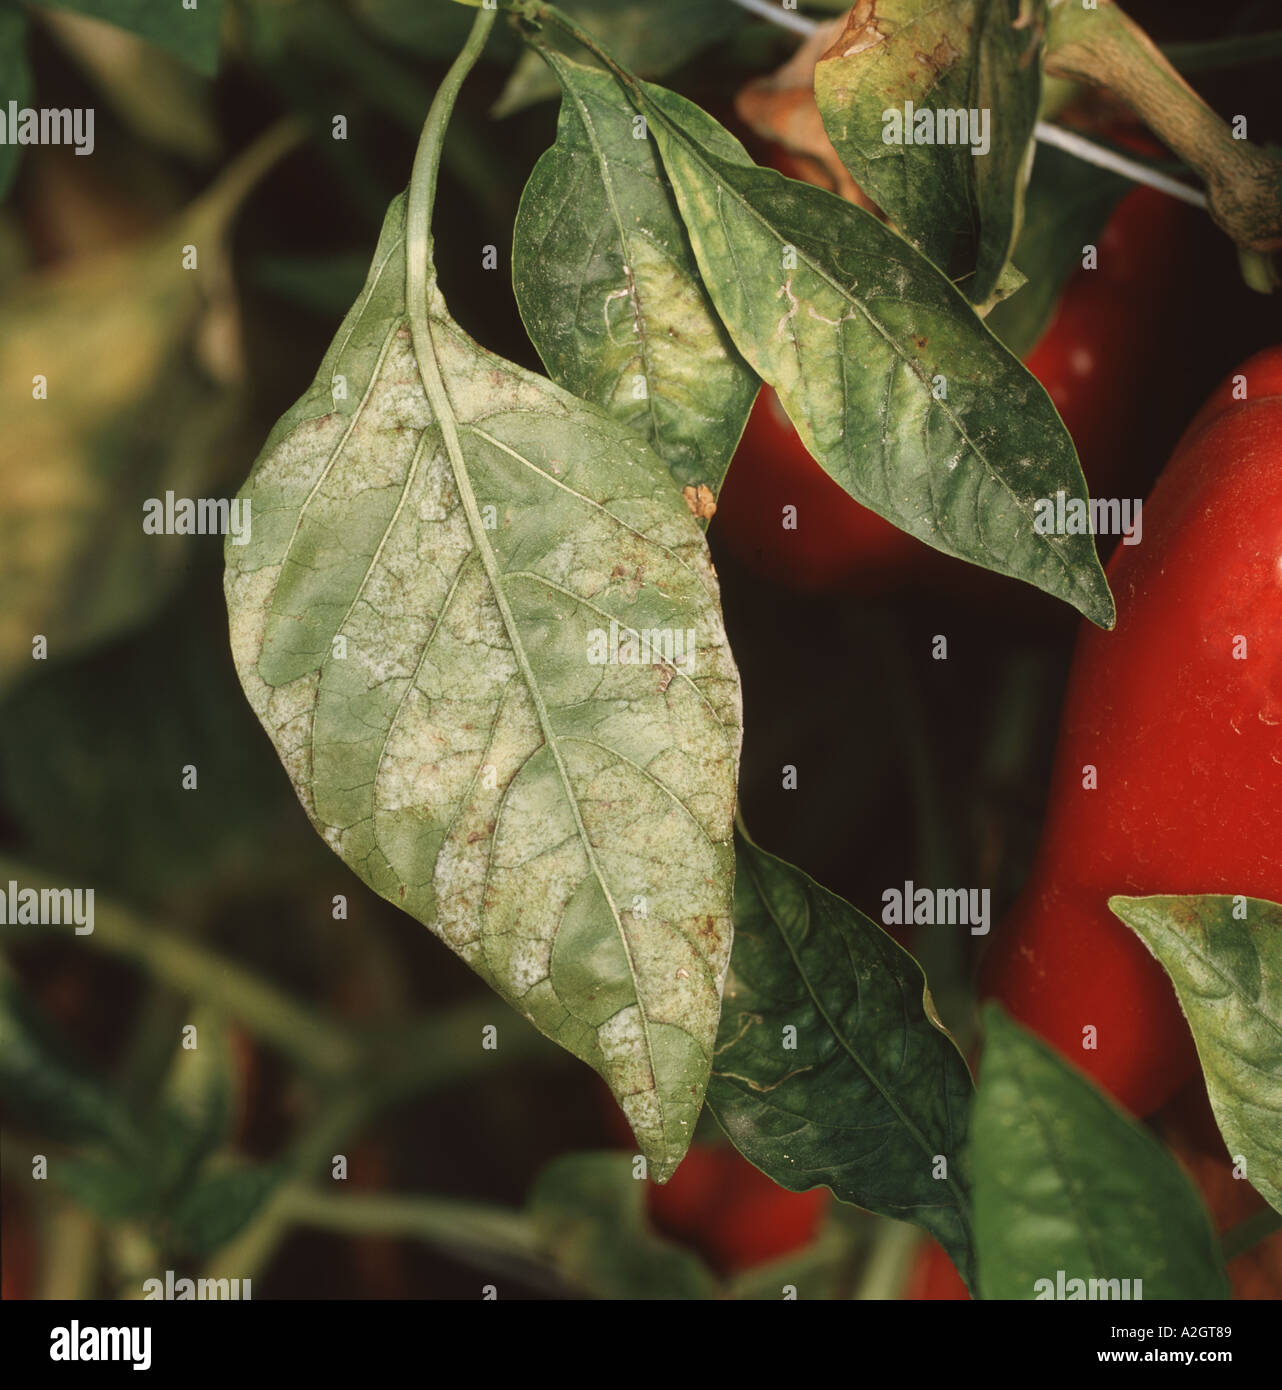 Oidium or powdery mildew Leveillula taurica on sweet pepper leaves Capsicum annuum Stock Photo